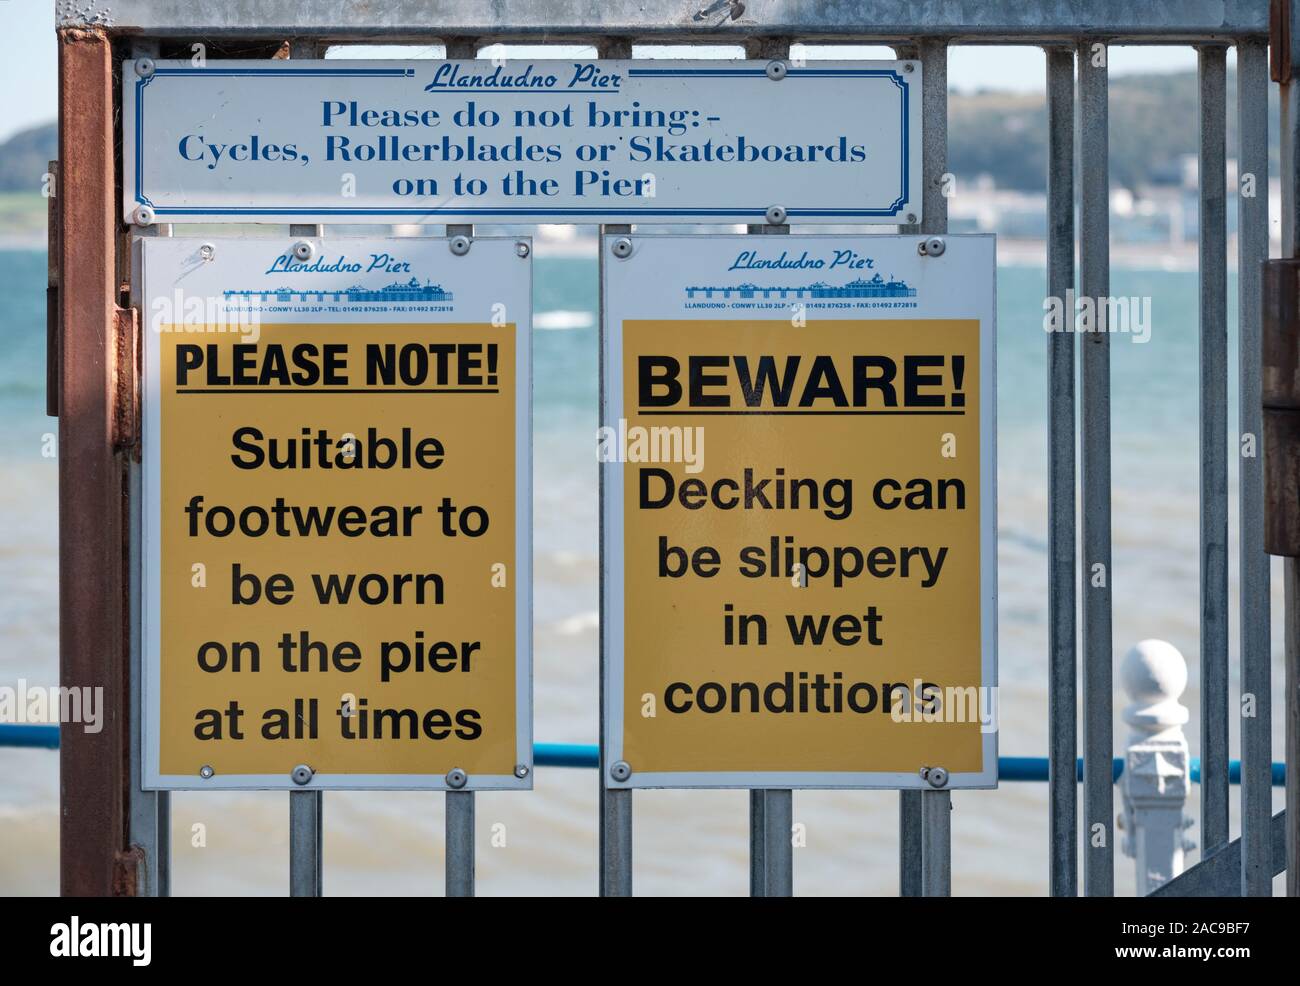 Warning signs on Llandudno Pier: Beware slippery, Footwear worn, No cycles...  Llandudno, Wales, Stock Photo